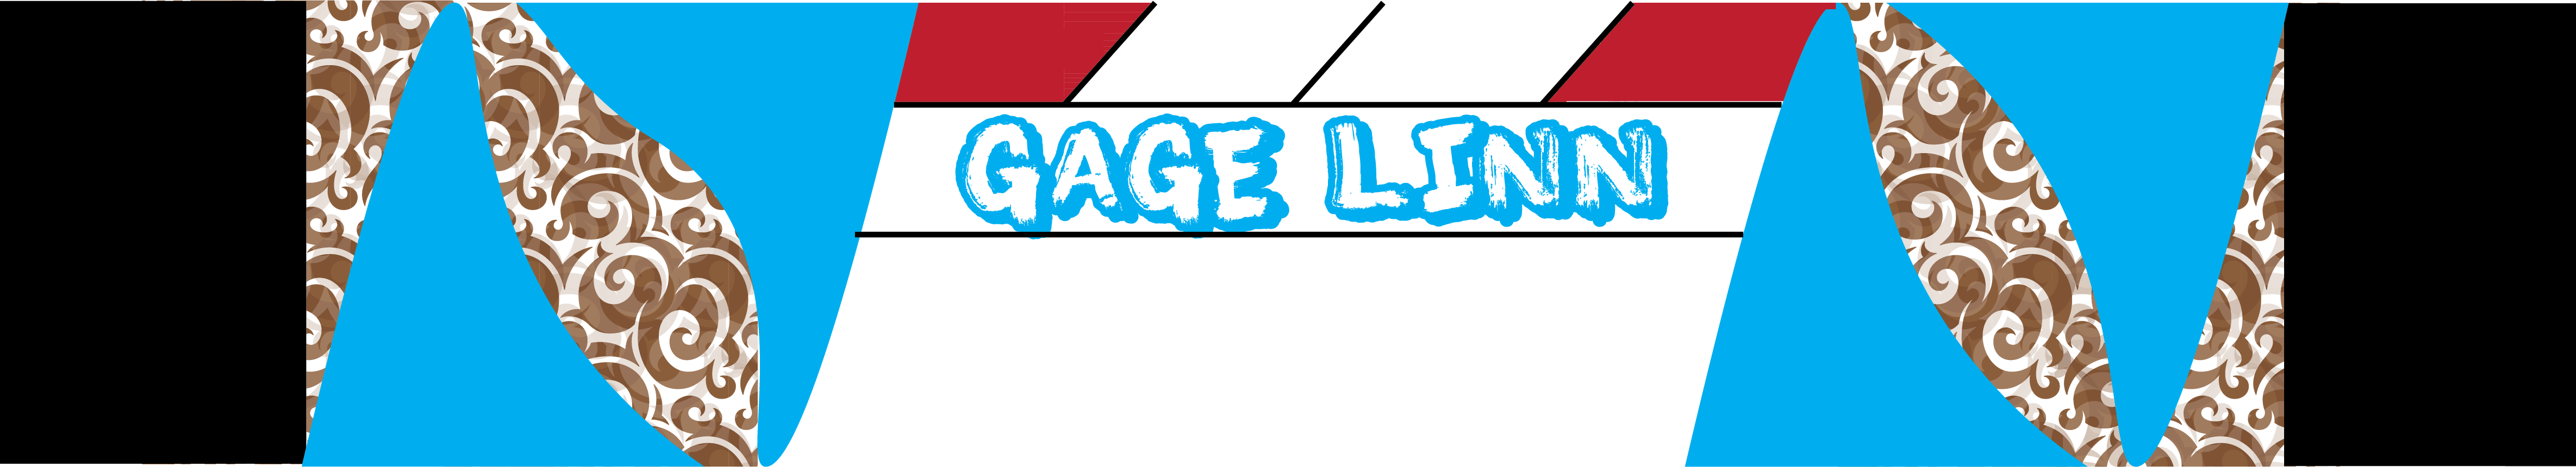 Gage Linn's profile banner